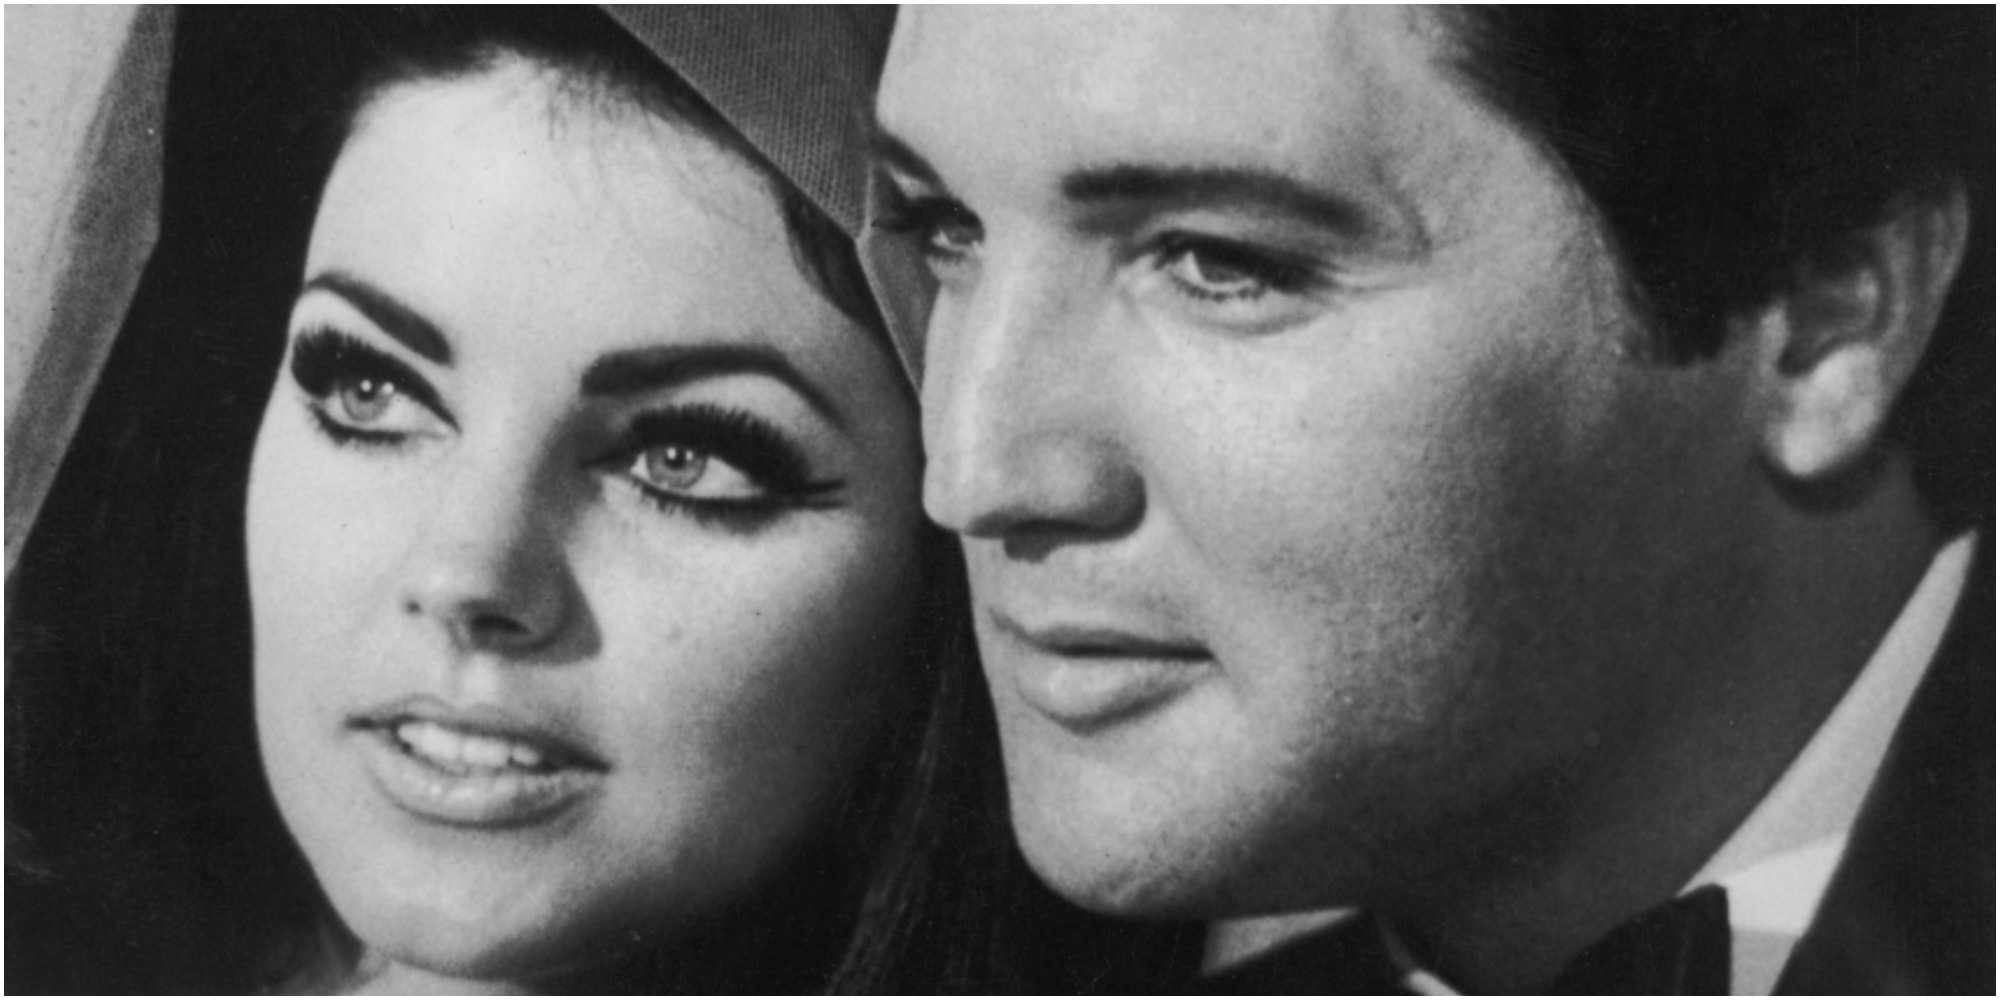 Priscilla and Elvis Presley pose cheek to cheek on their wedding day.